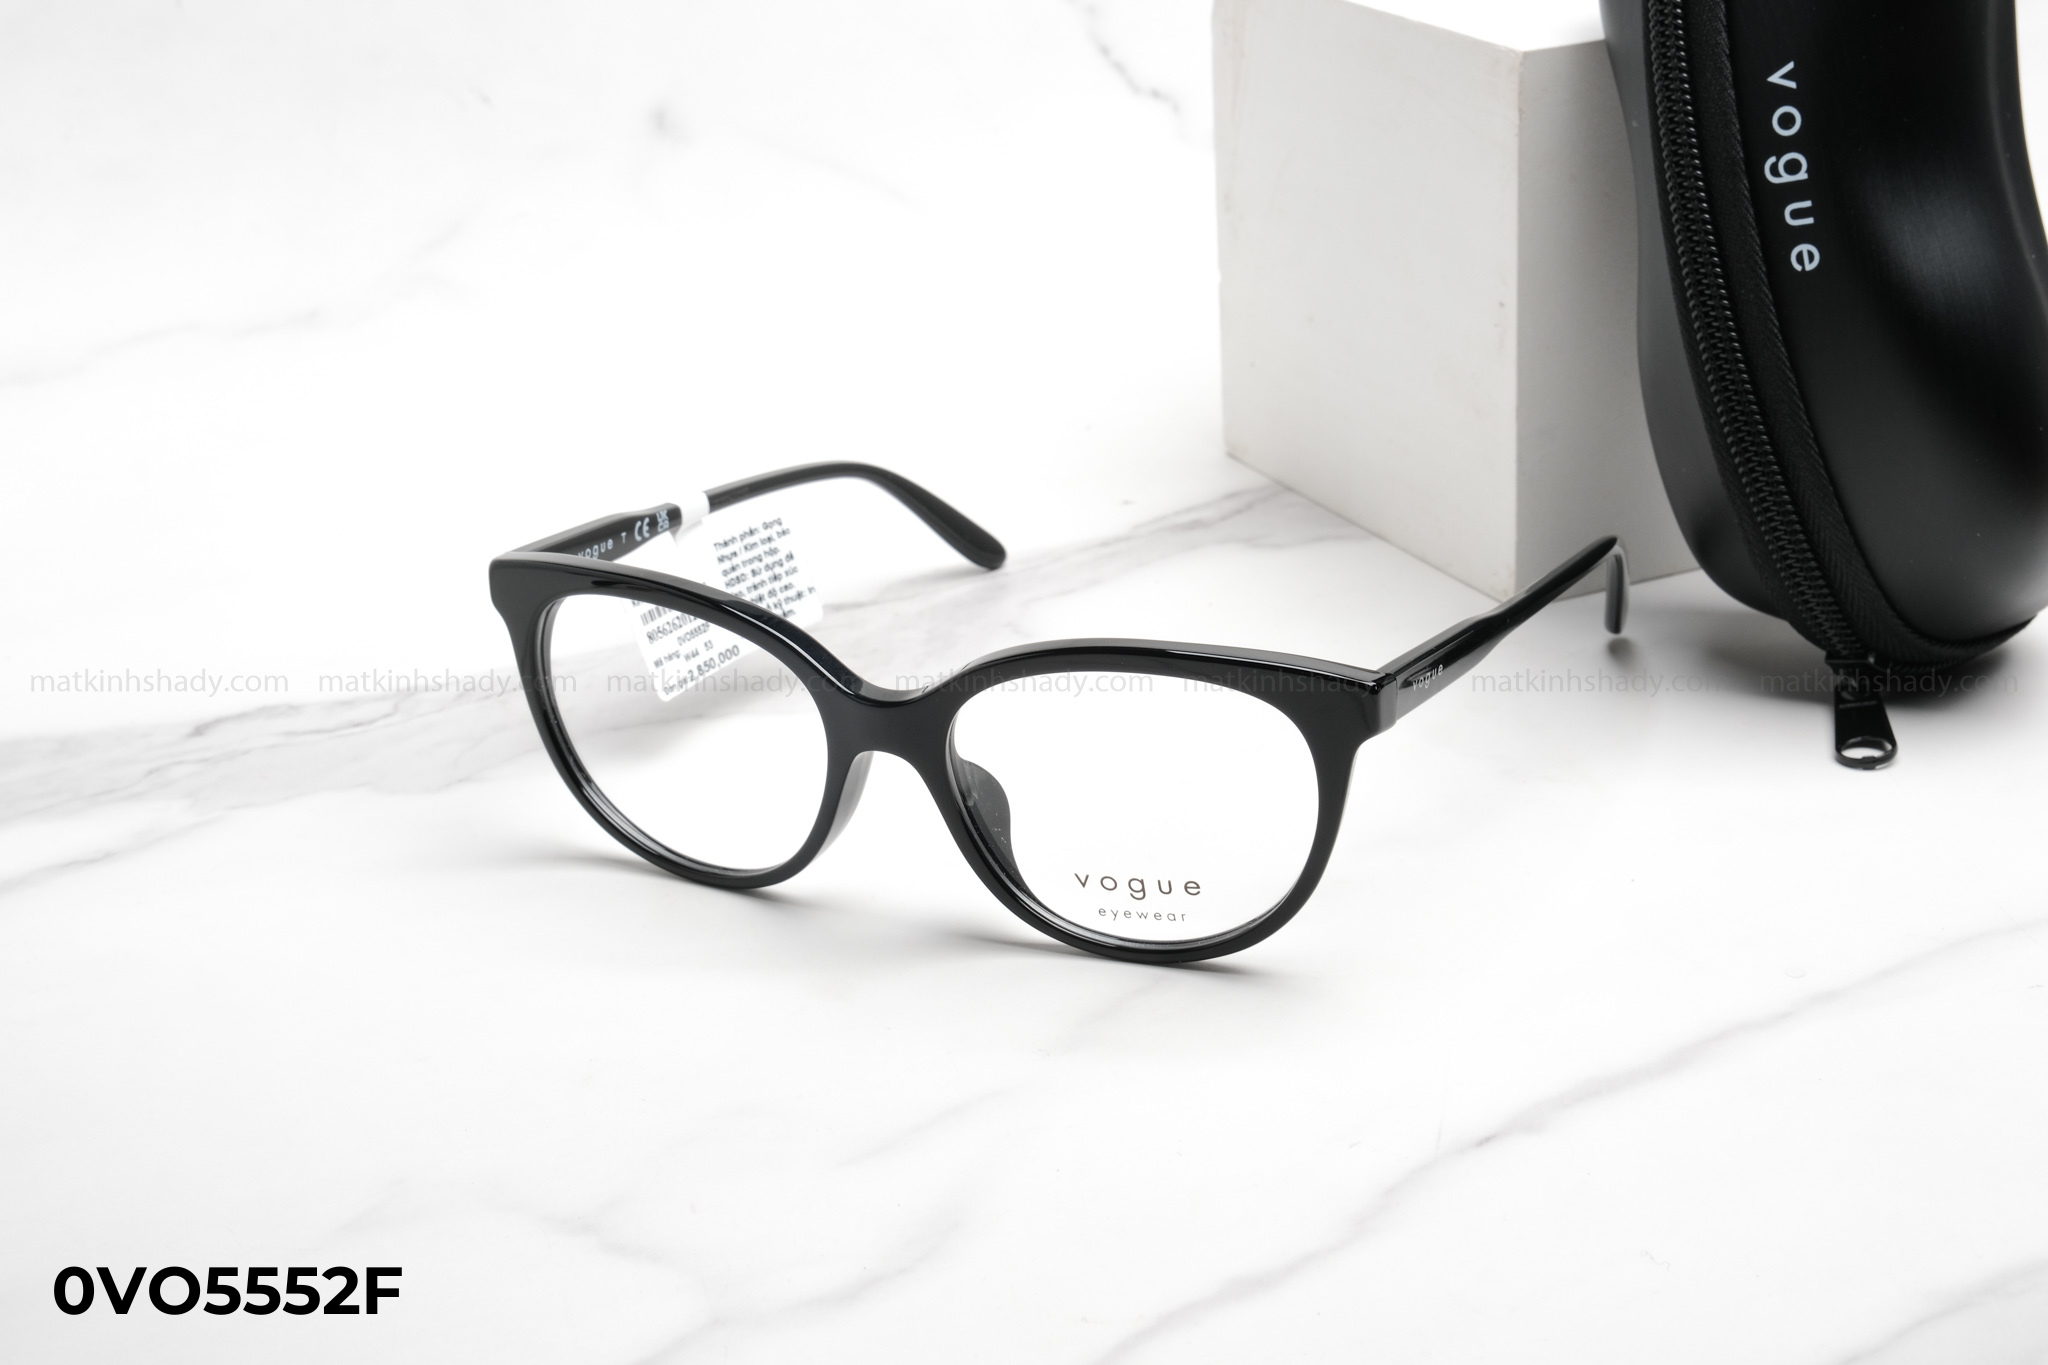  Vogue Eyewear - Glasses - 0VO5552F 